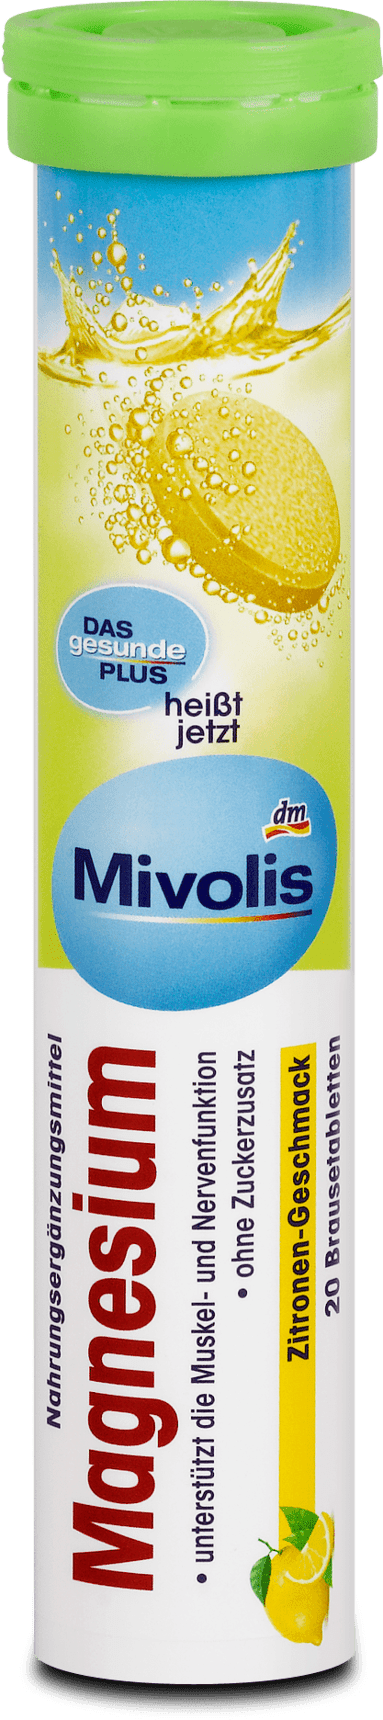 Mivolis Carbohydrate Blocker Weight Loss Tablets, 28 pcs.